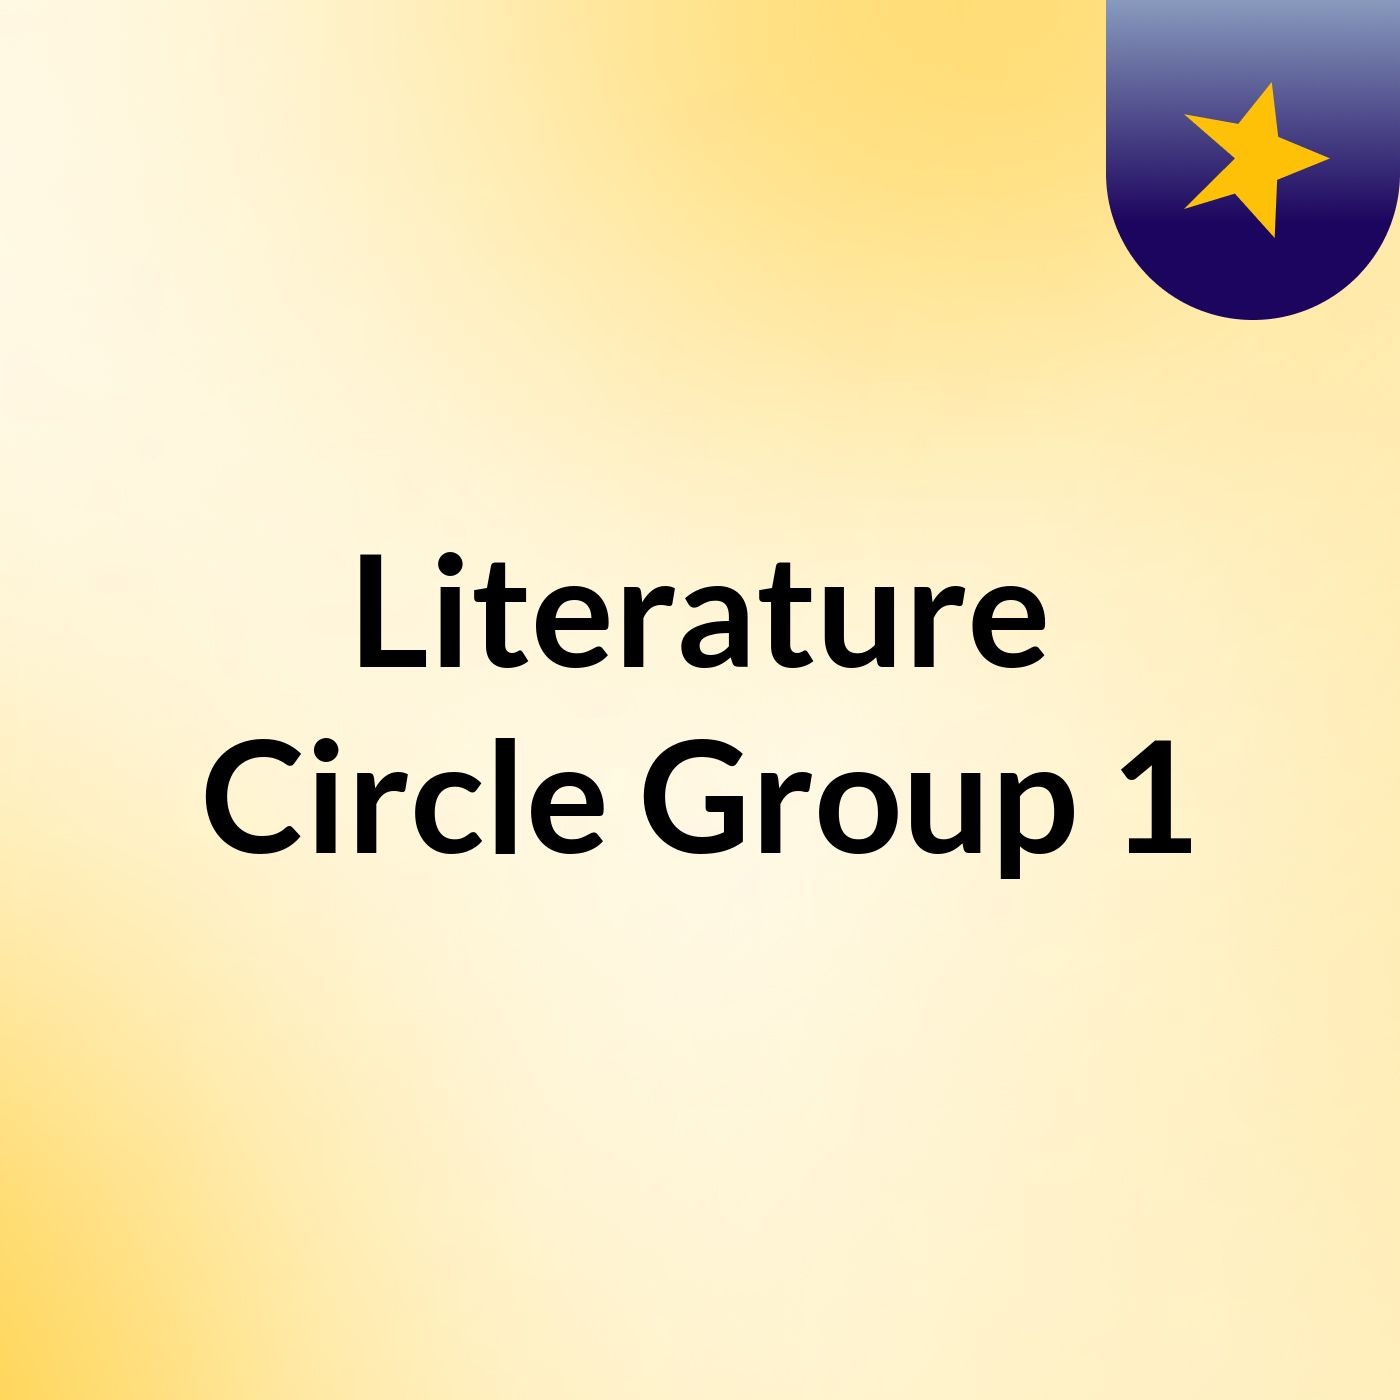 Literature Circle Group 1